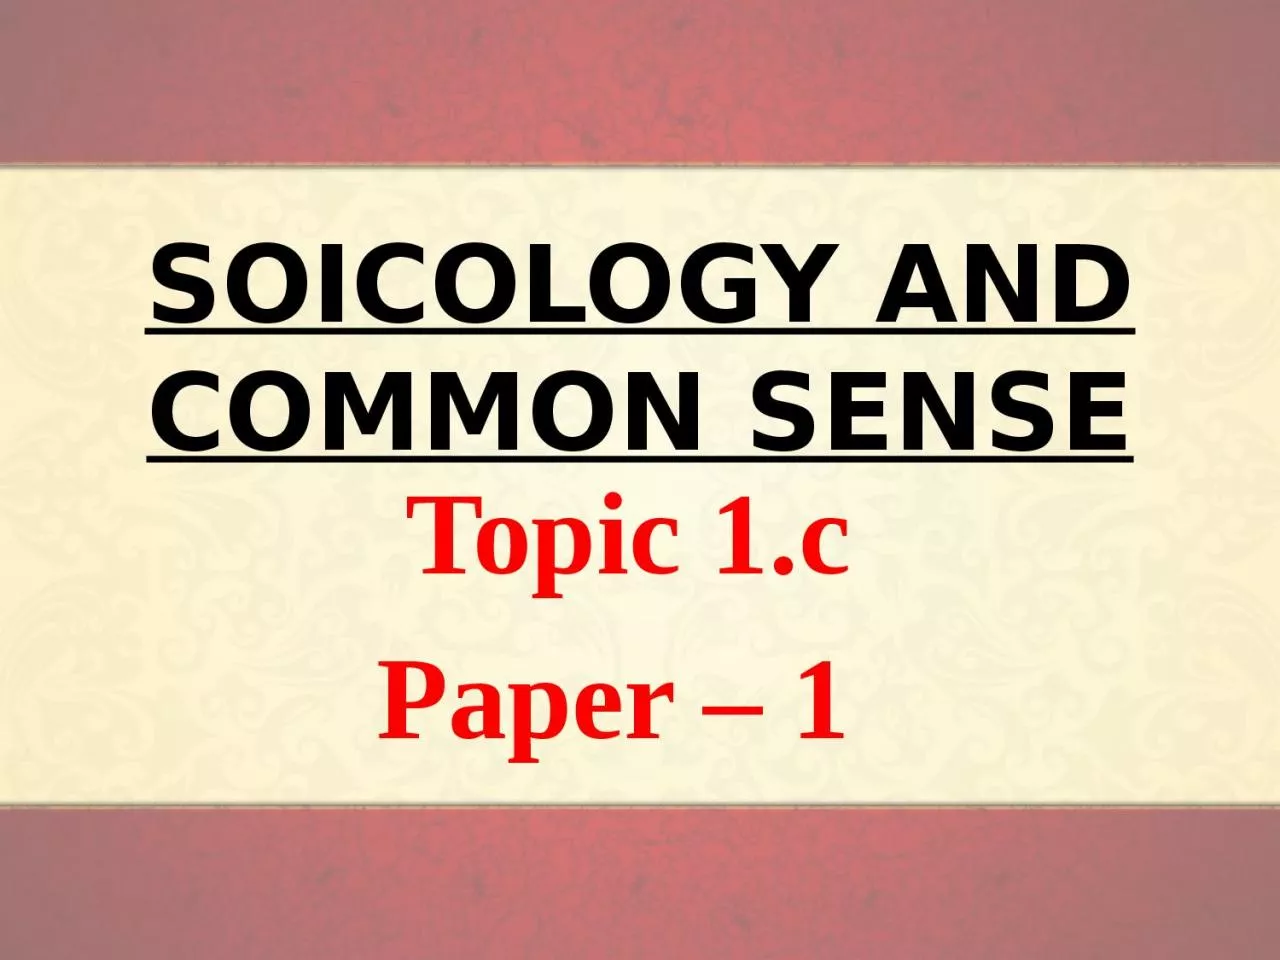 SOICOLOGY AND COMMON SENSE